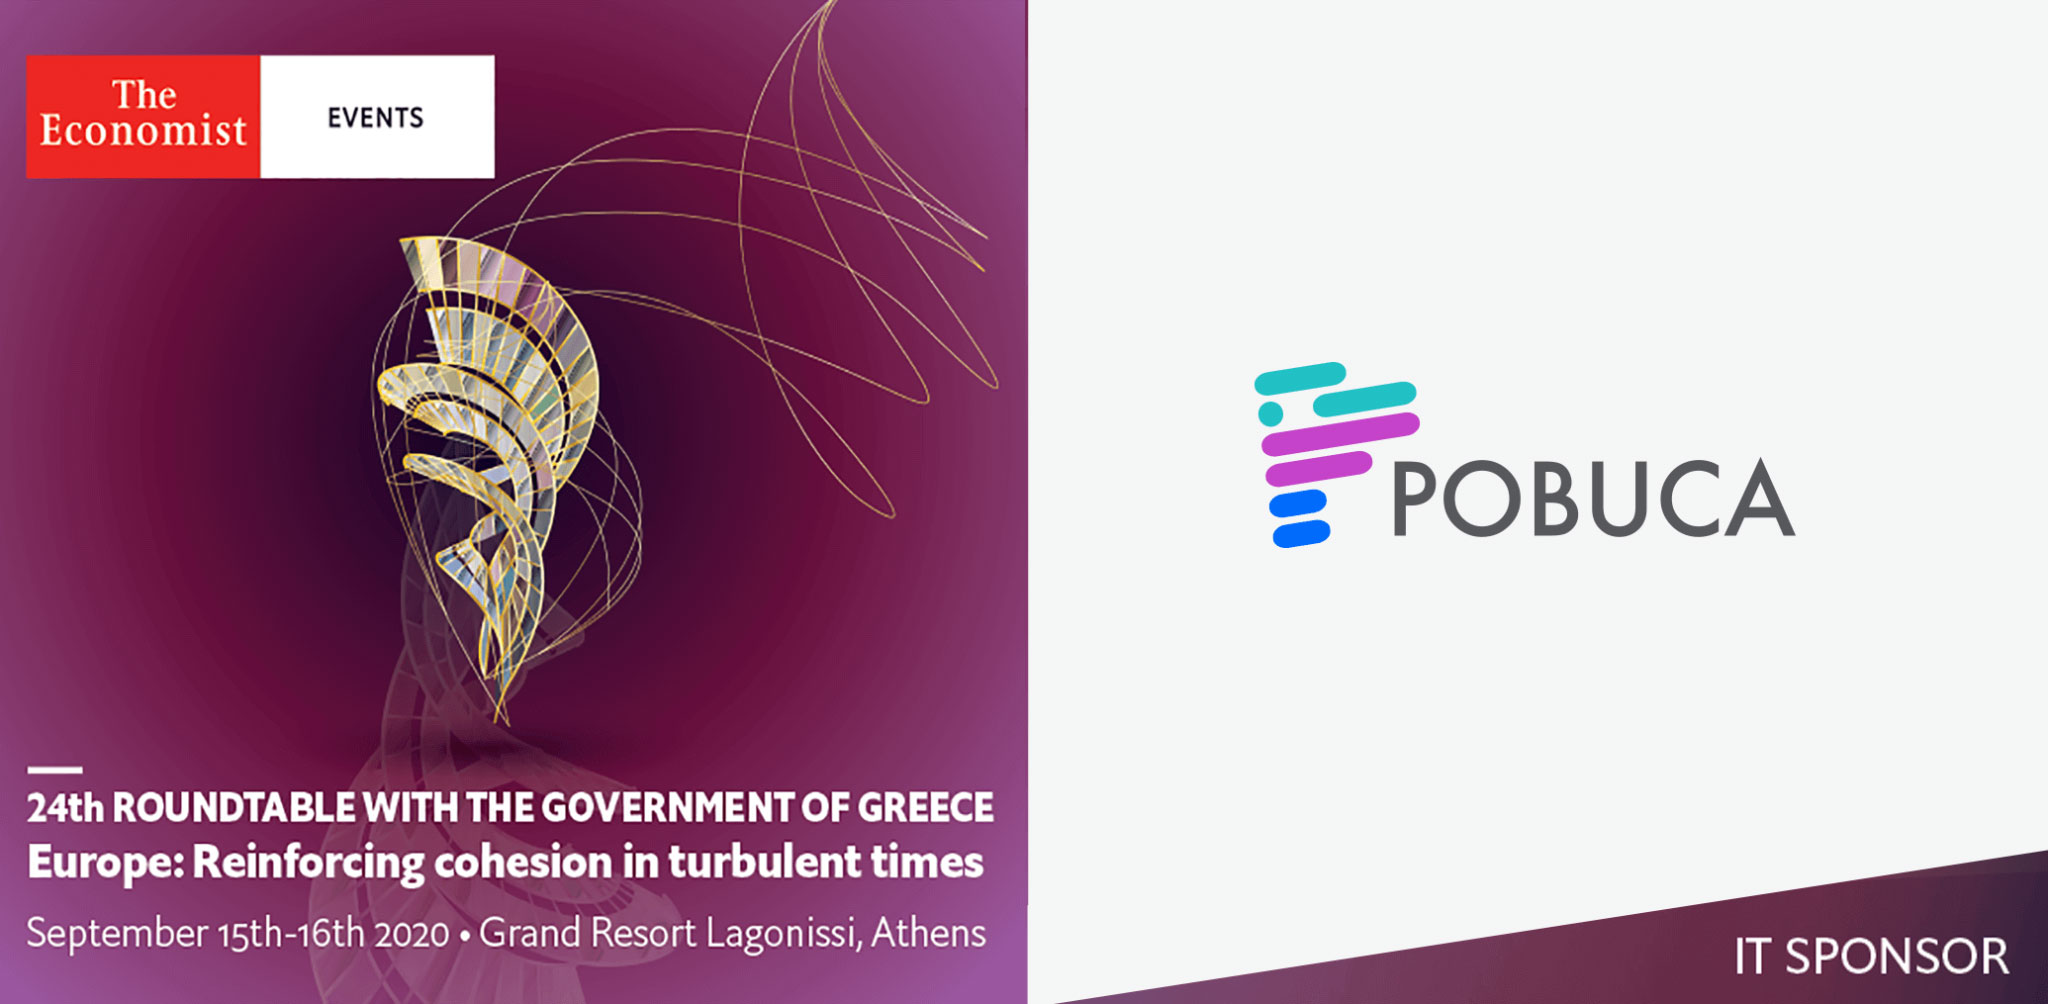 Pobuca participates in The Economist in Greece